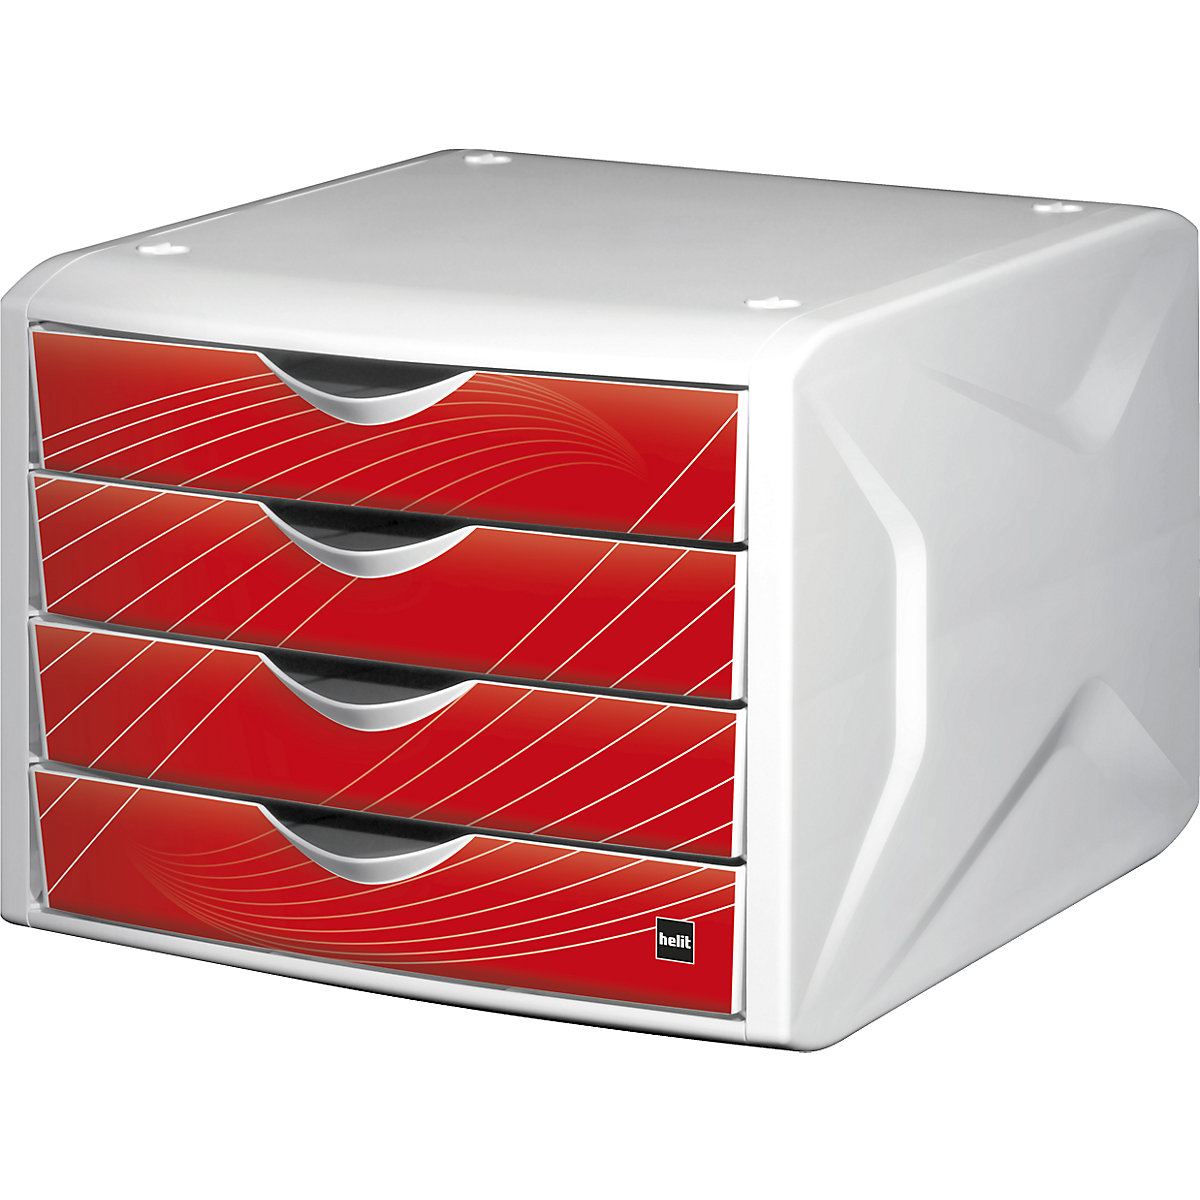 Schubladenbox helit, HxBxT 212 x 262 x 330 mm, VE 5 Stk, Schubladendesign red rook